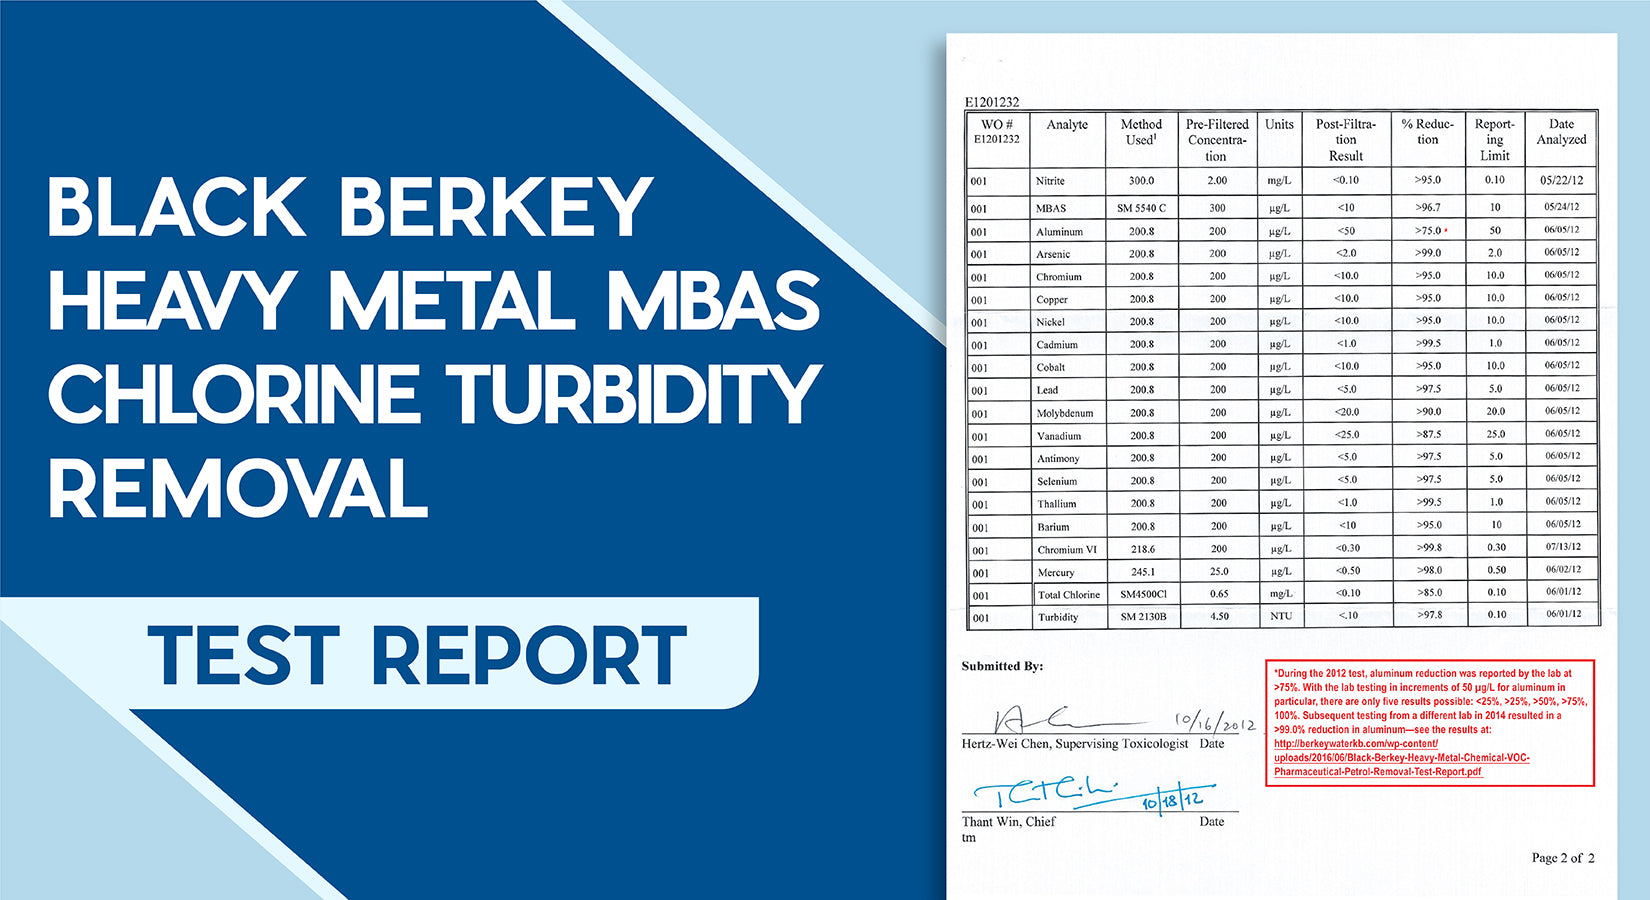 Black Berkey Heavy Metal MBAS Chlorine Turbidity Removal Test Report